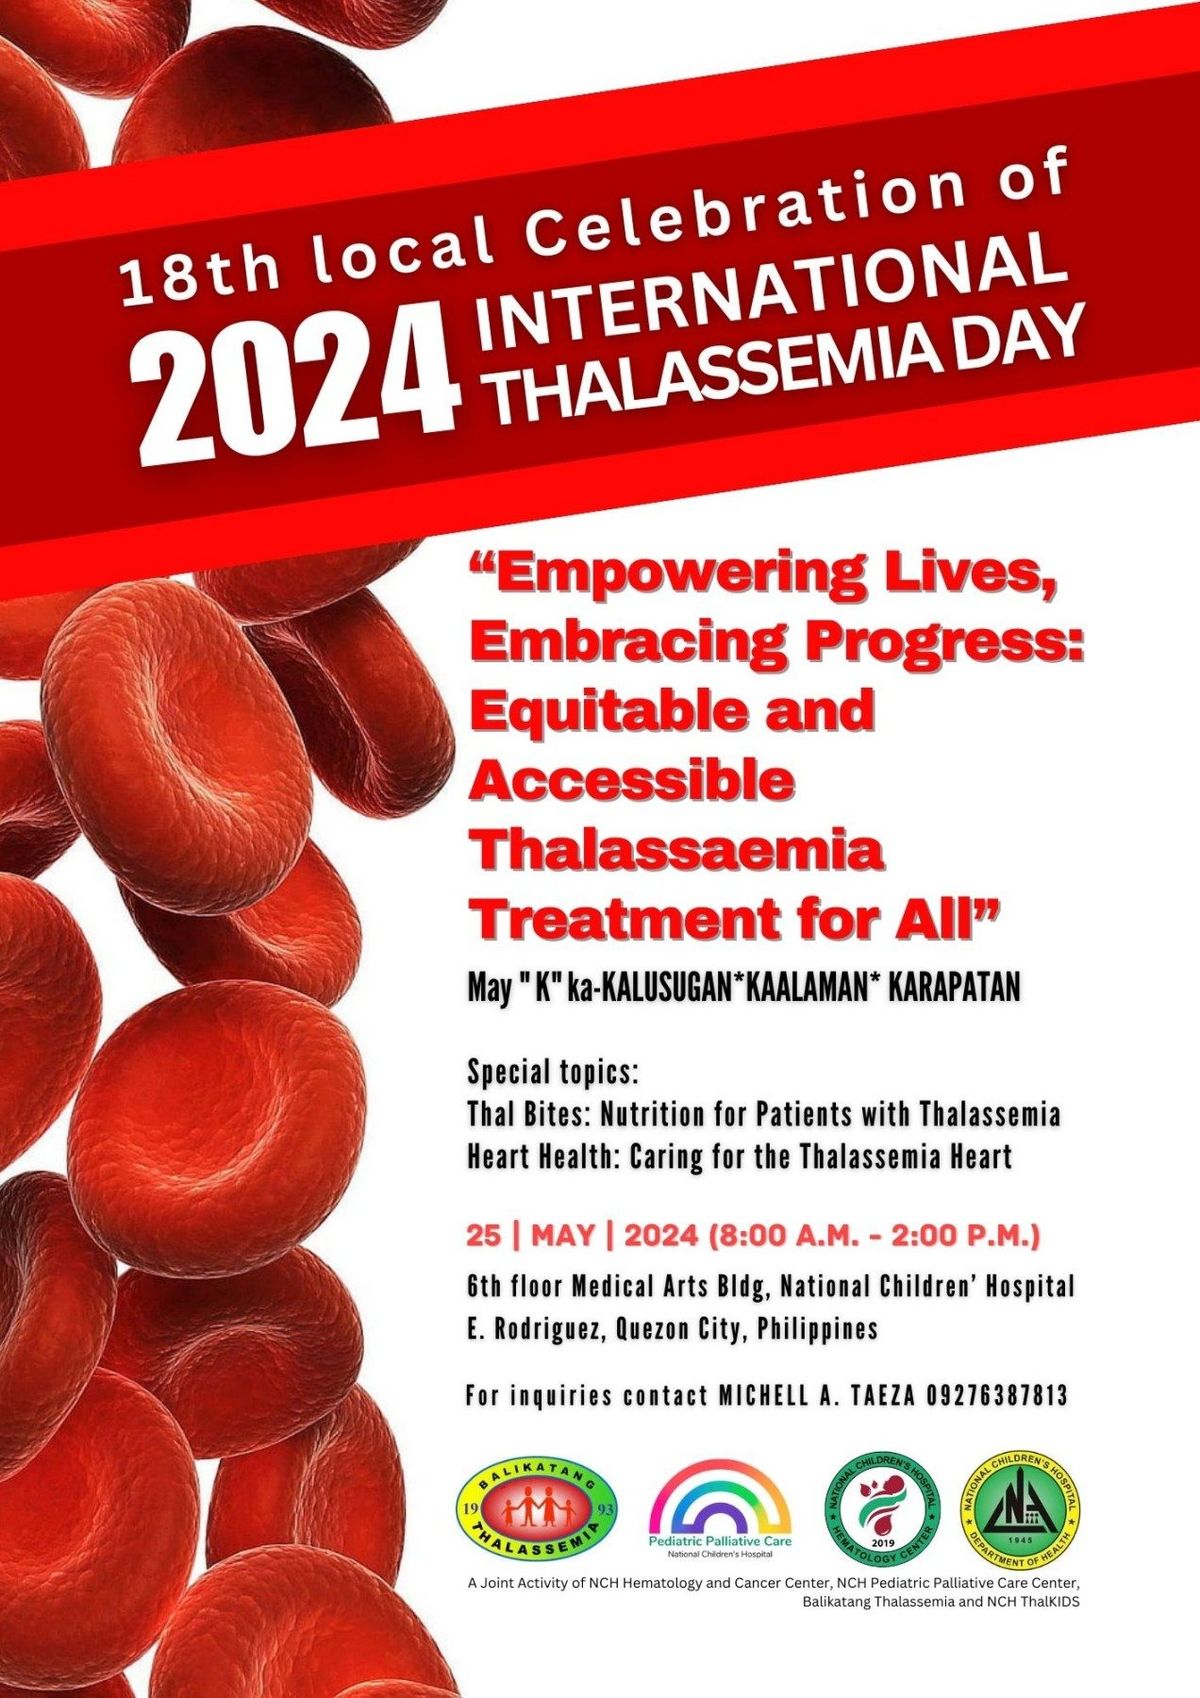 18th local celebration of International Thalassemia Day